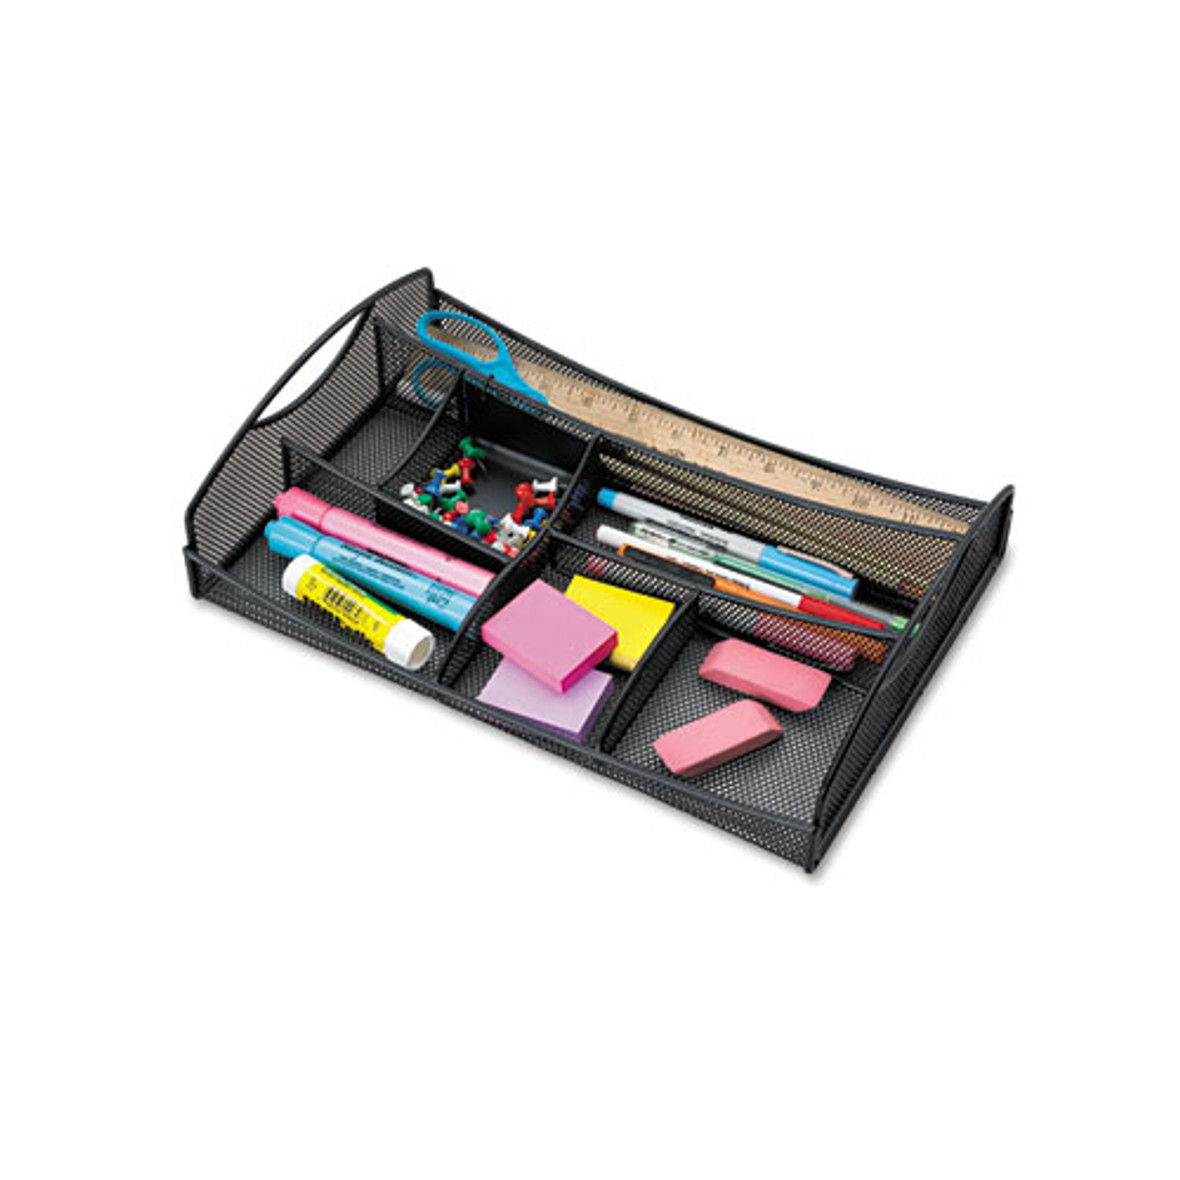 Safco® Onyx Mesh Drawer Organizer, Seven Compartments, 13 x 8.75 x 2.75, Steel, Black